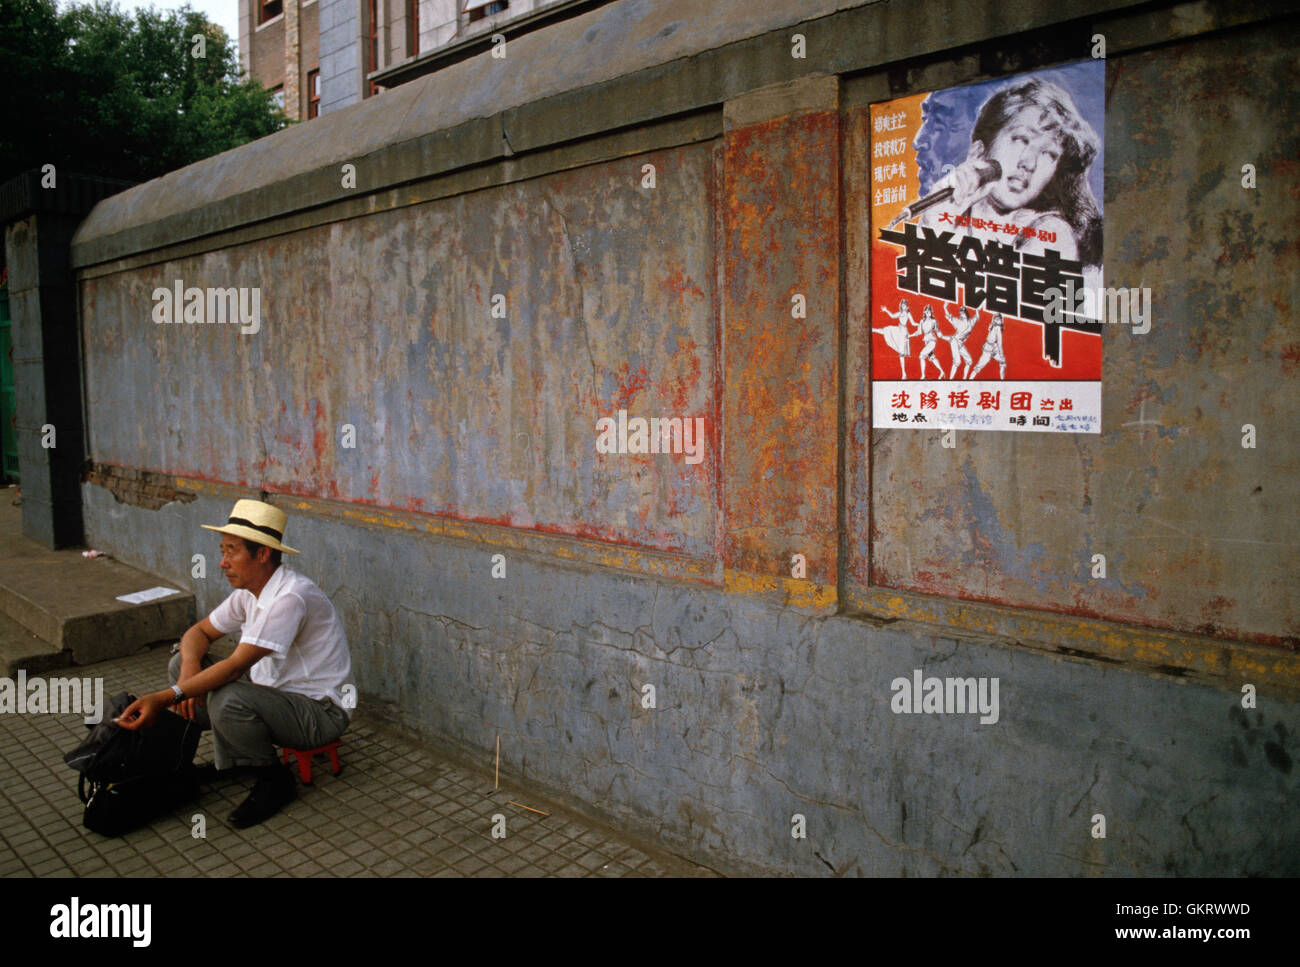 man crouching down next to wall with pop music poster, Shenyang, China. Stock Photo